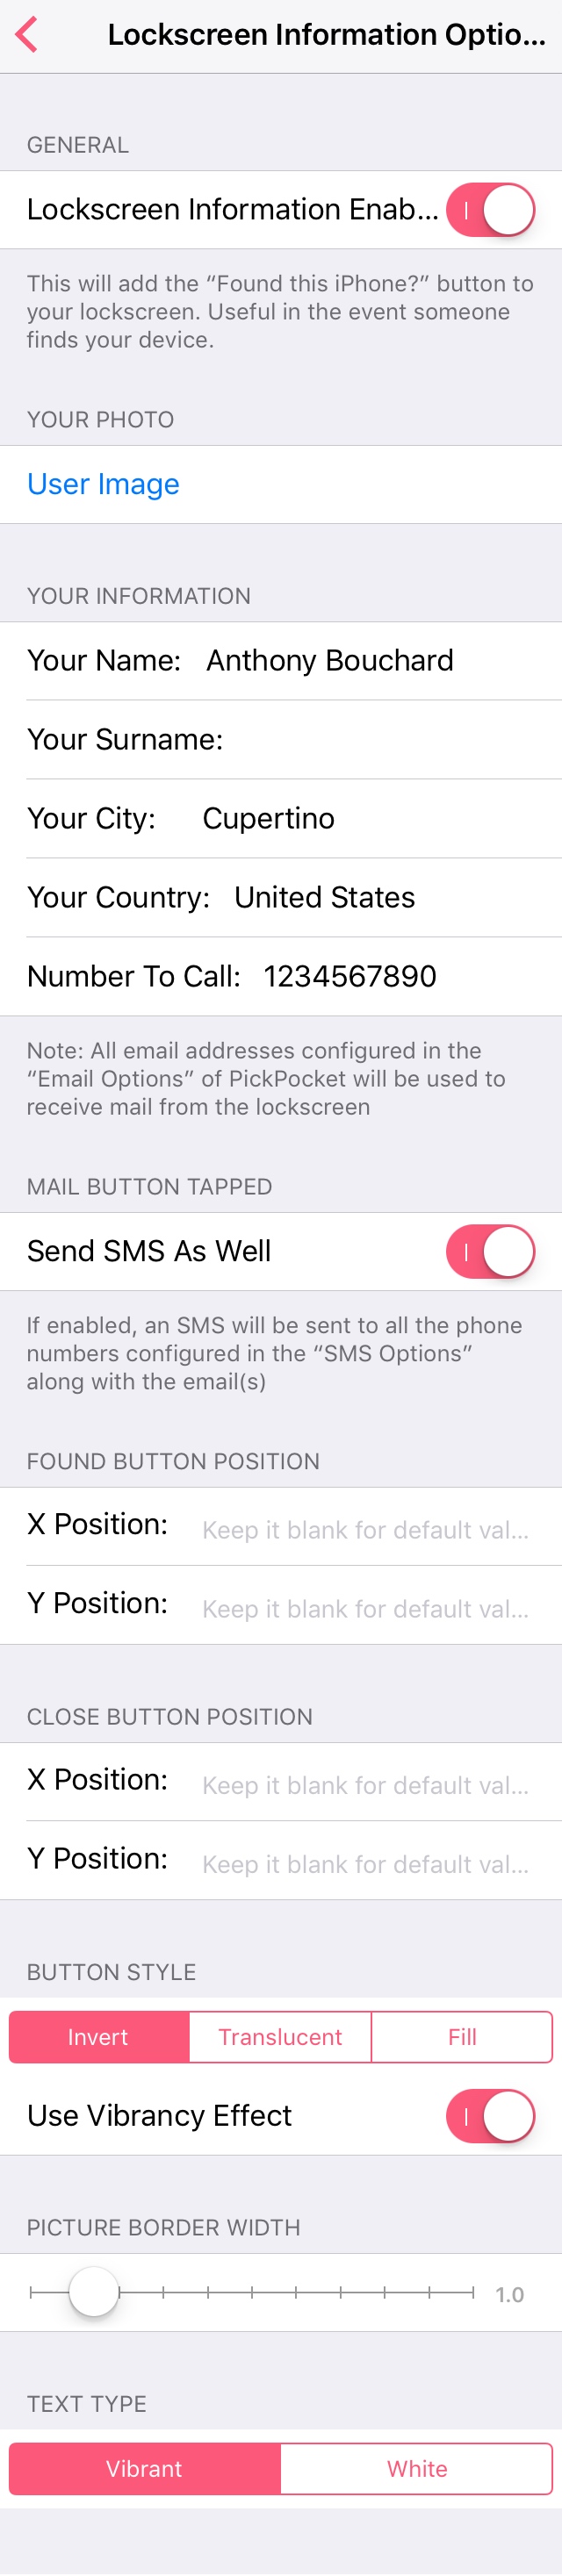 Lock screen information options PickPocket